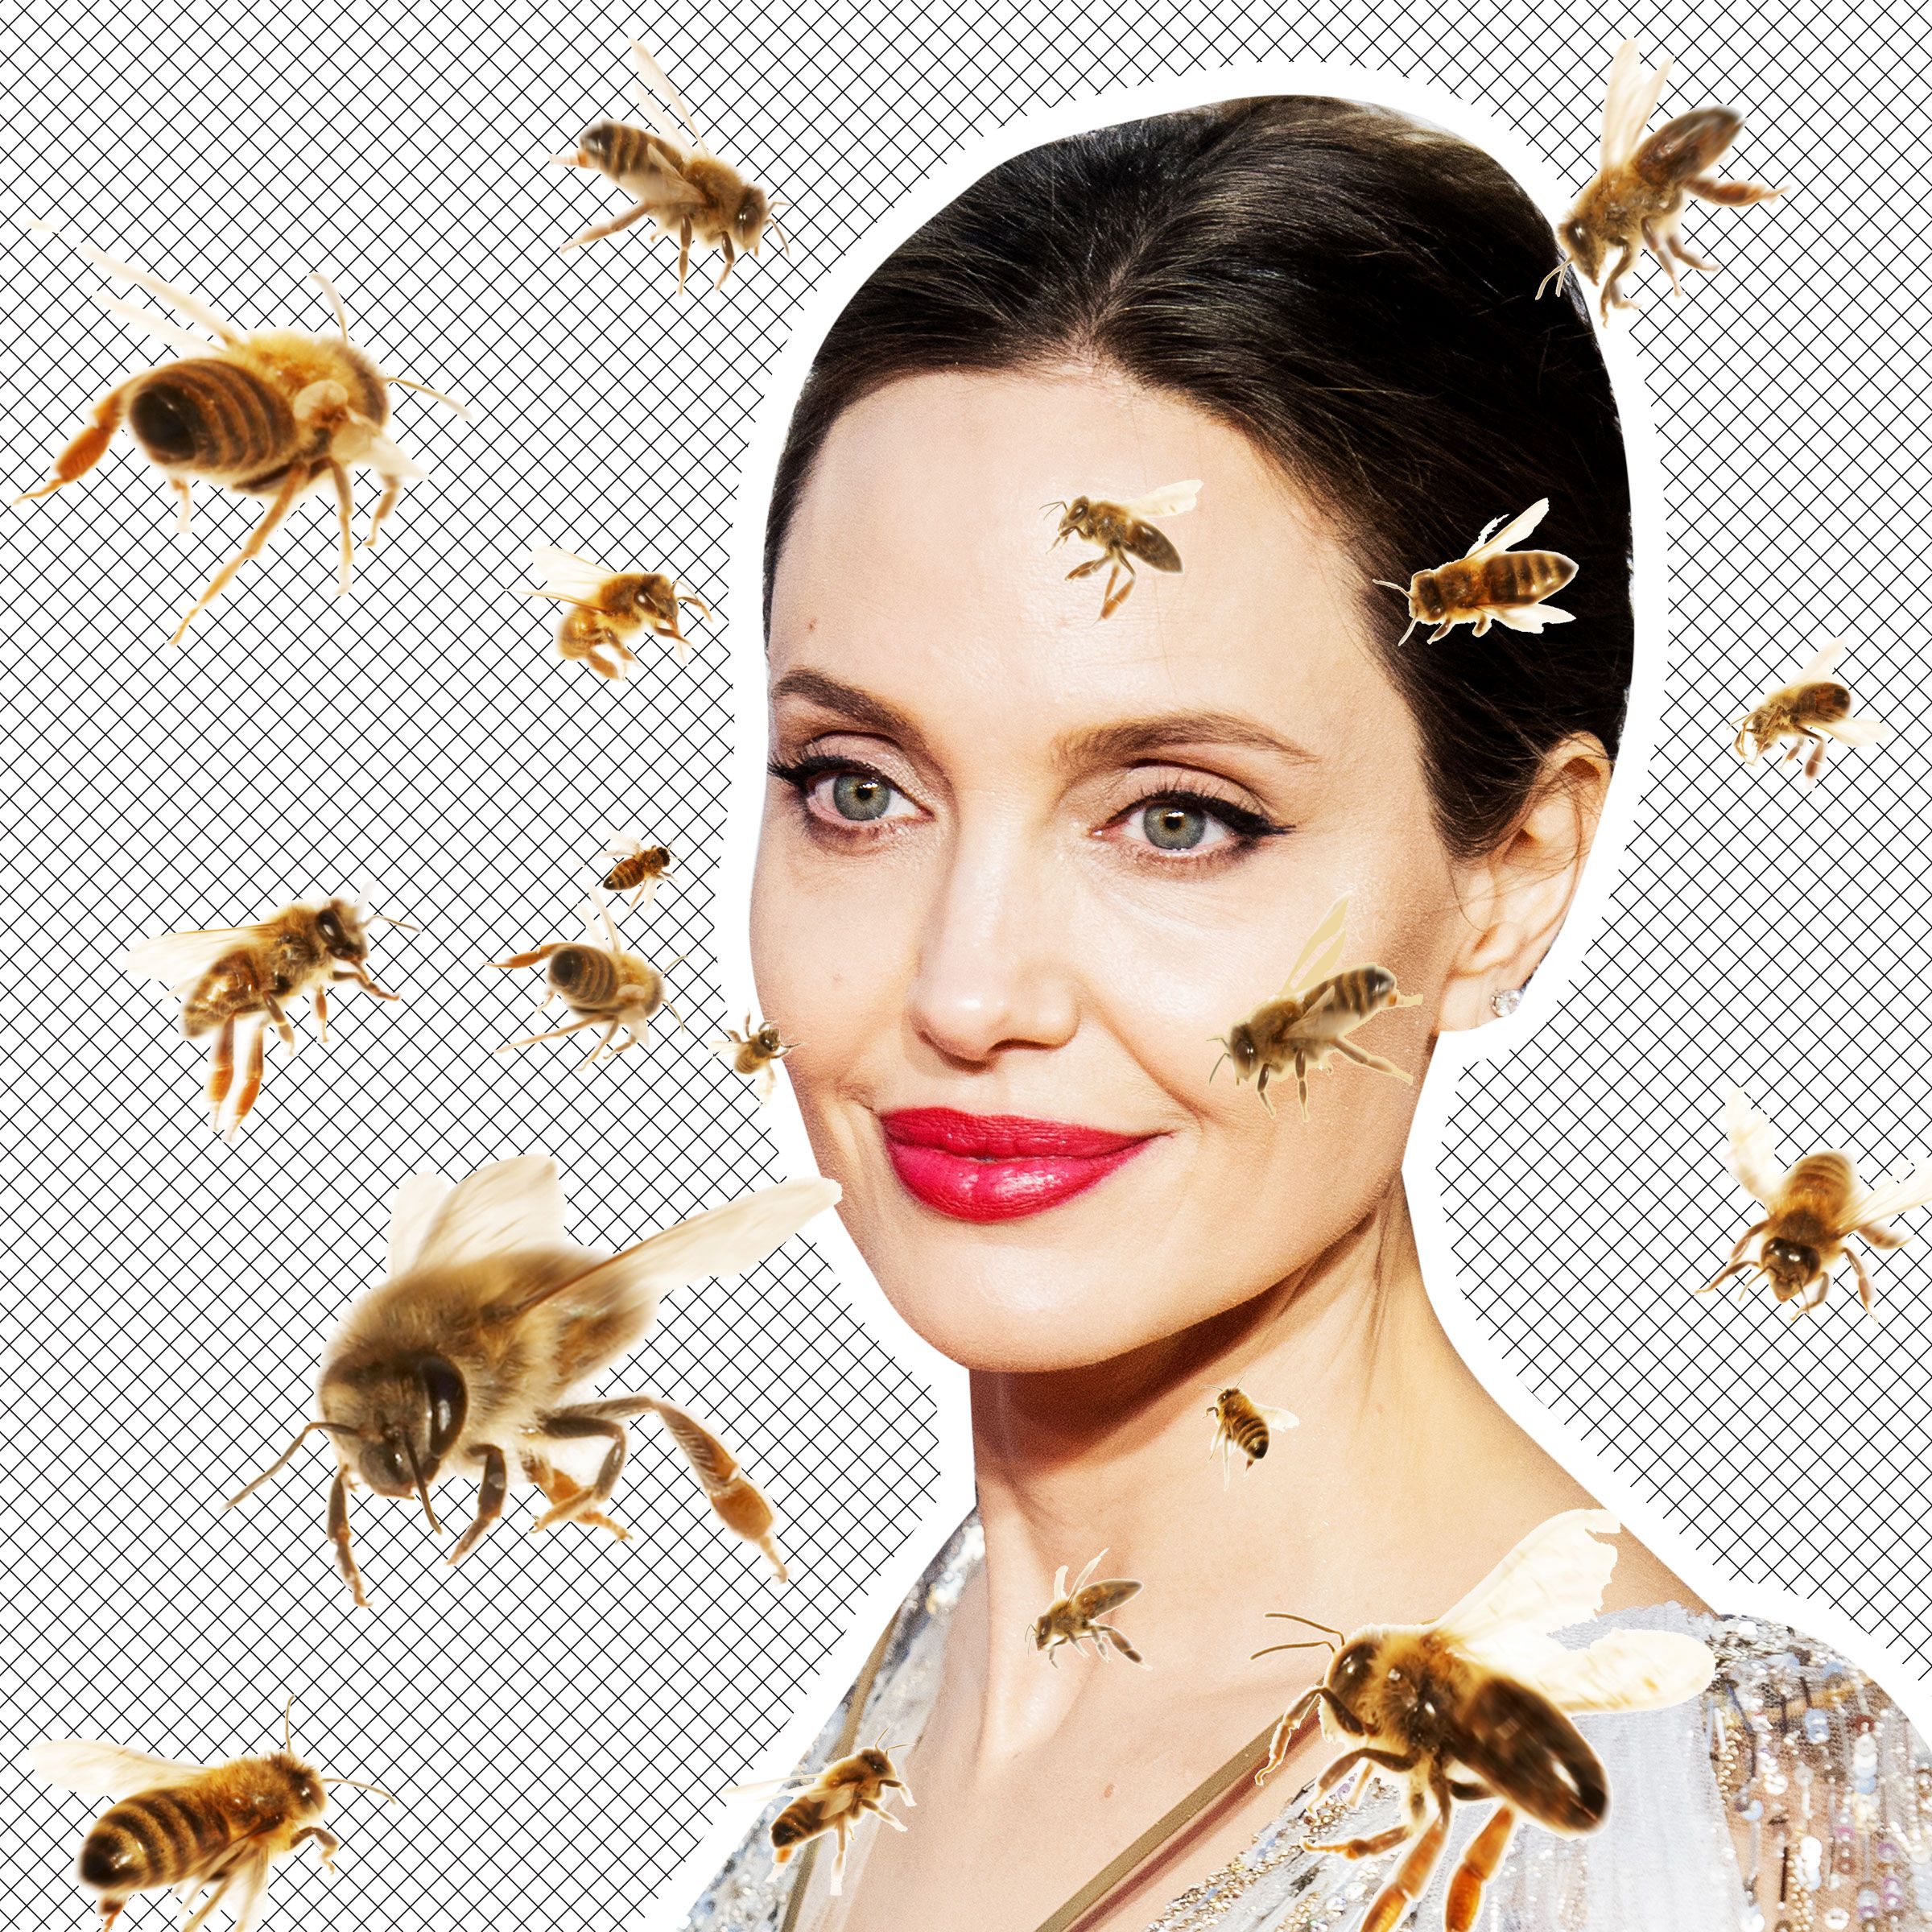 Angelina Jolie bee picture among Siena International Photo Award